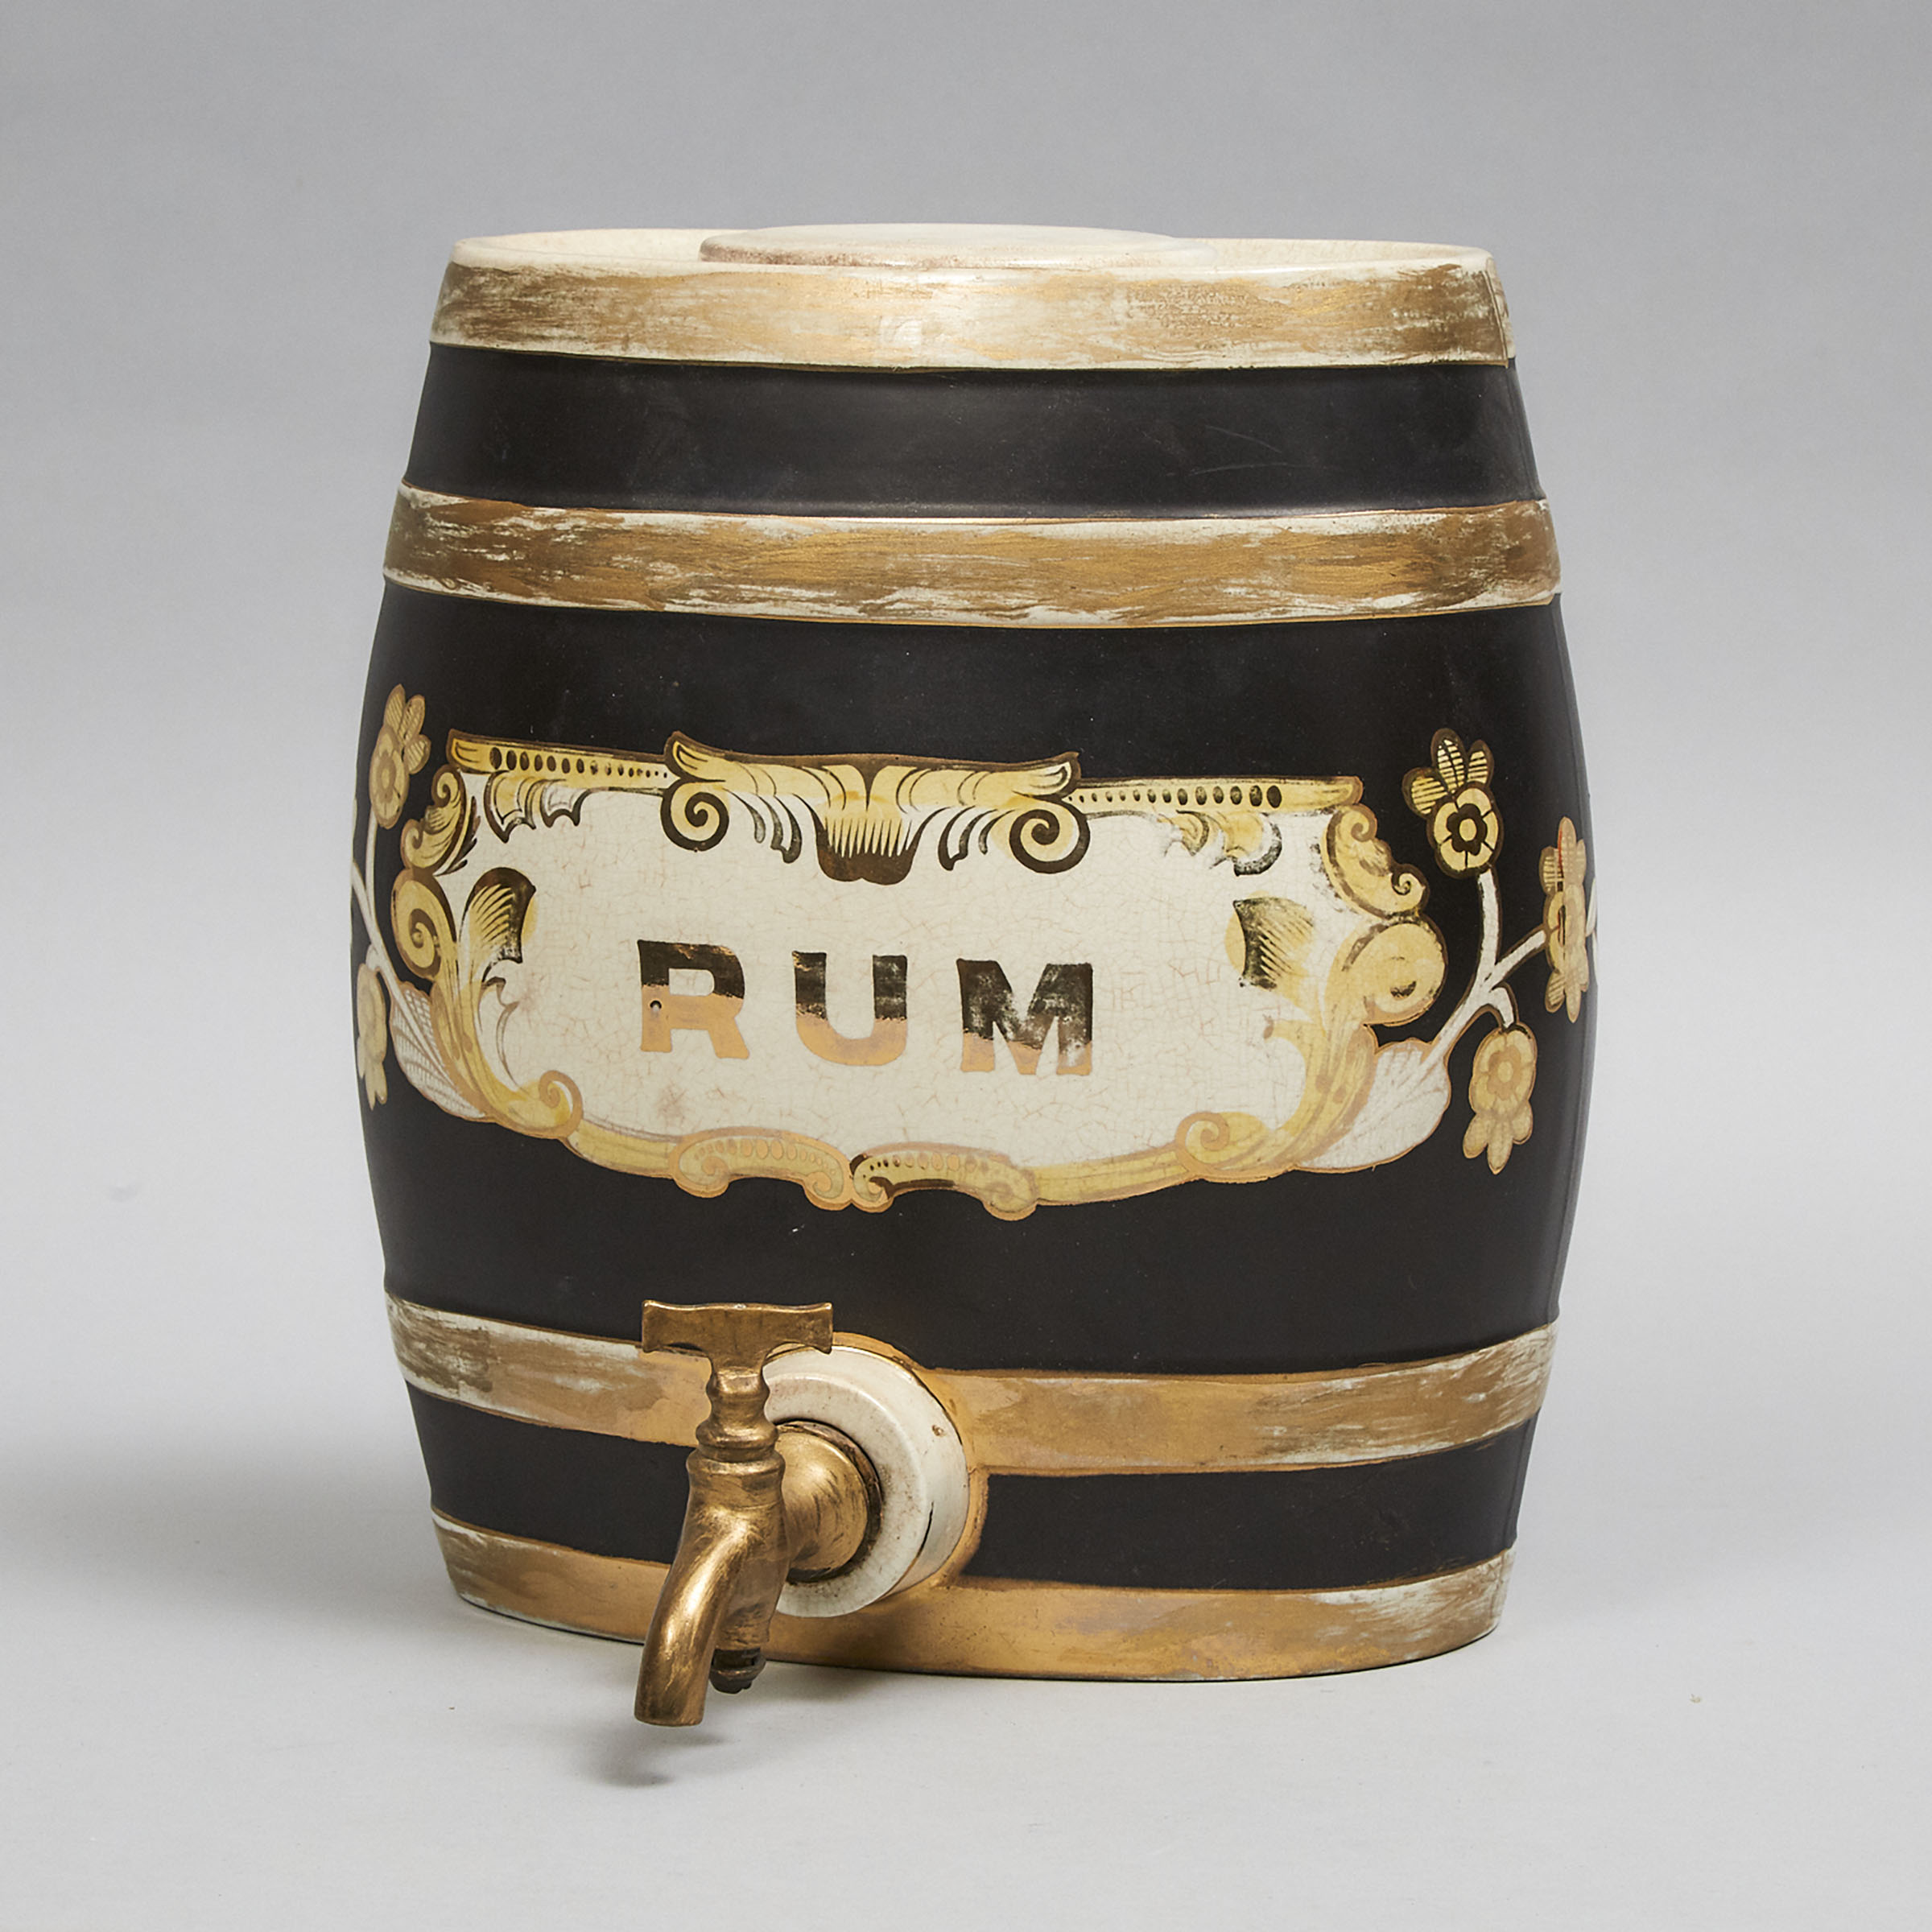 English Ironstone Barrel Form Rum Cask, mid 19th century